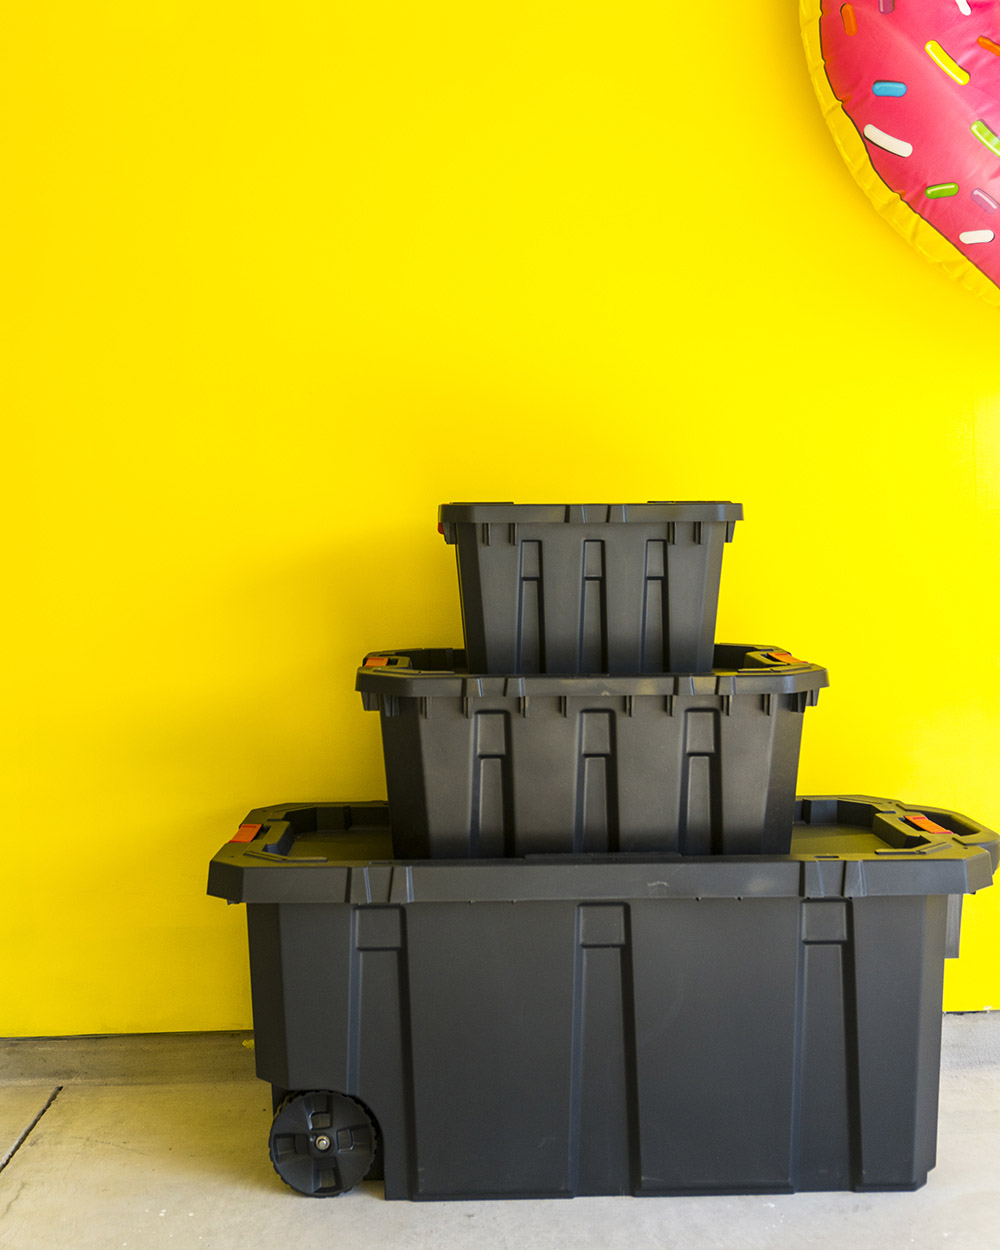 Black storage bin stacked against wall